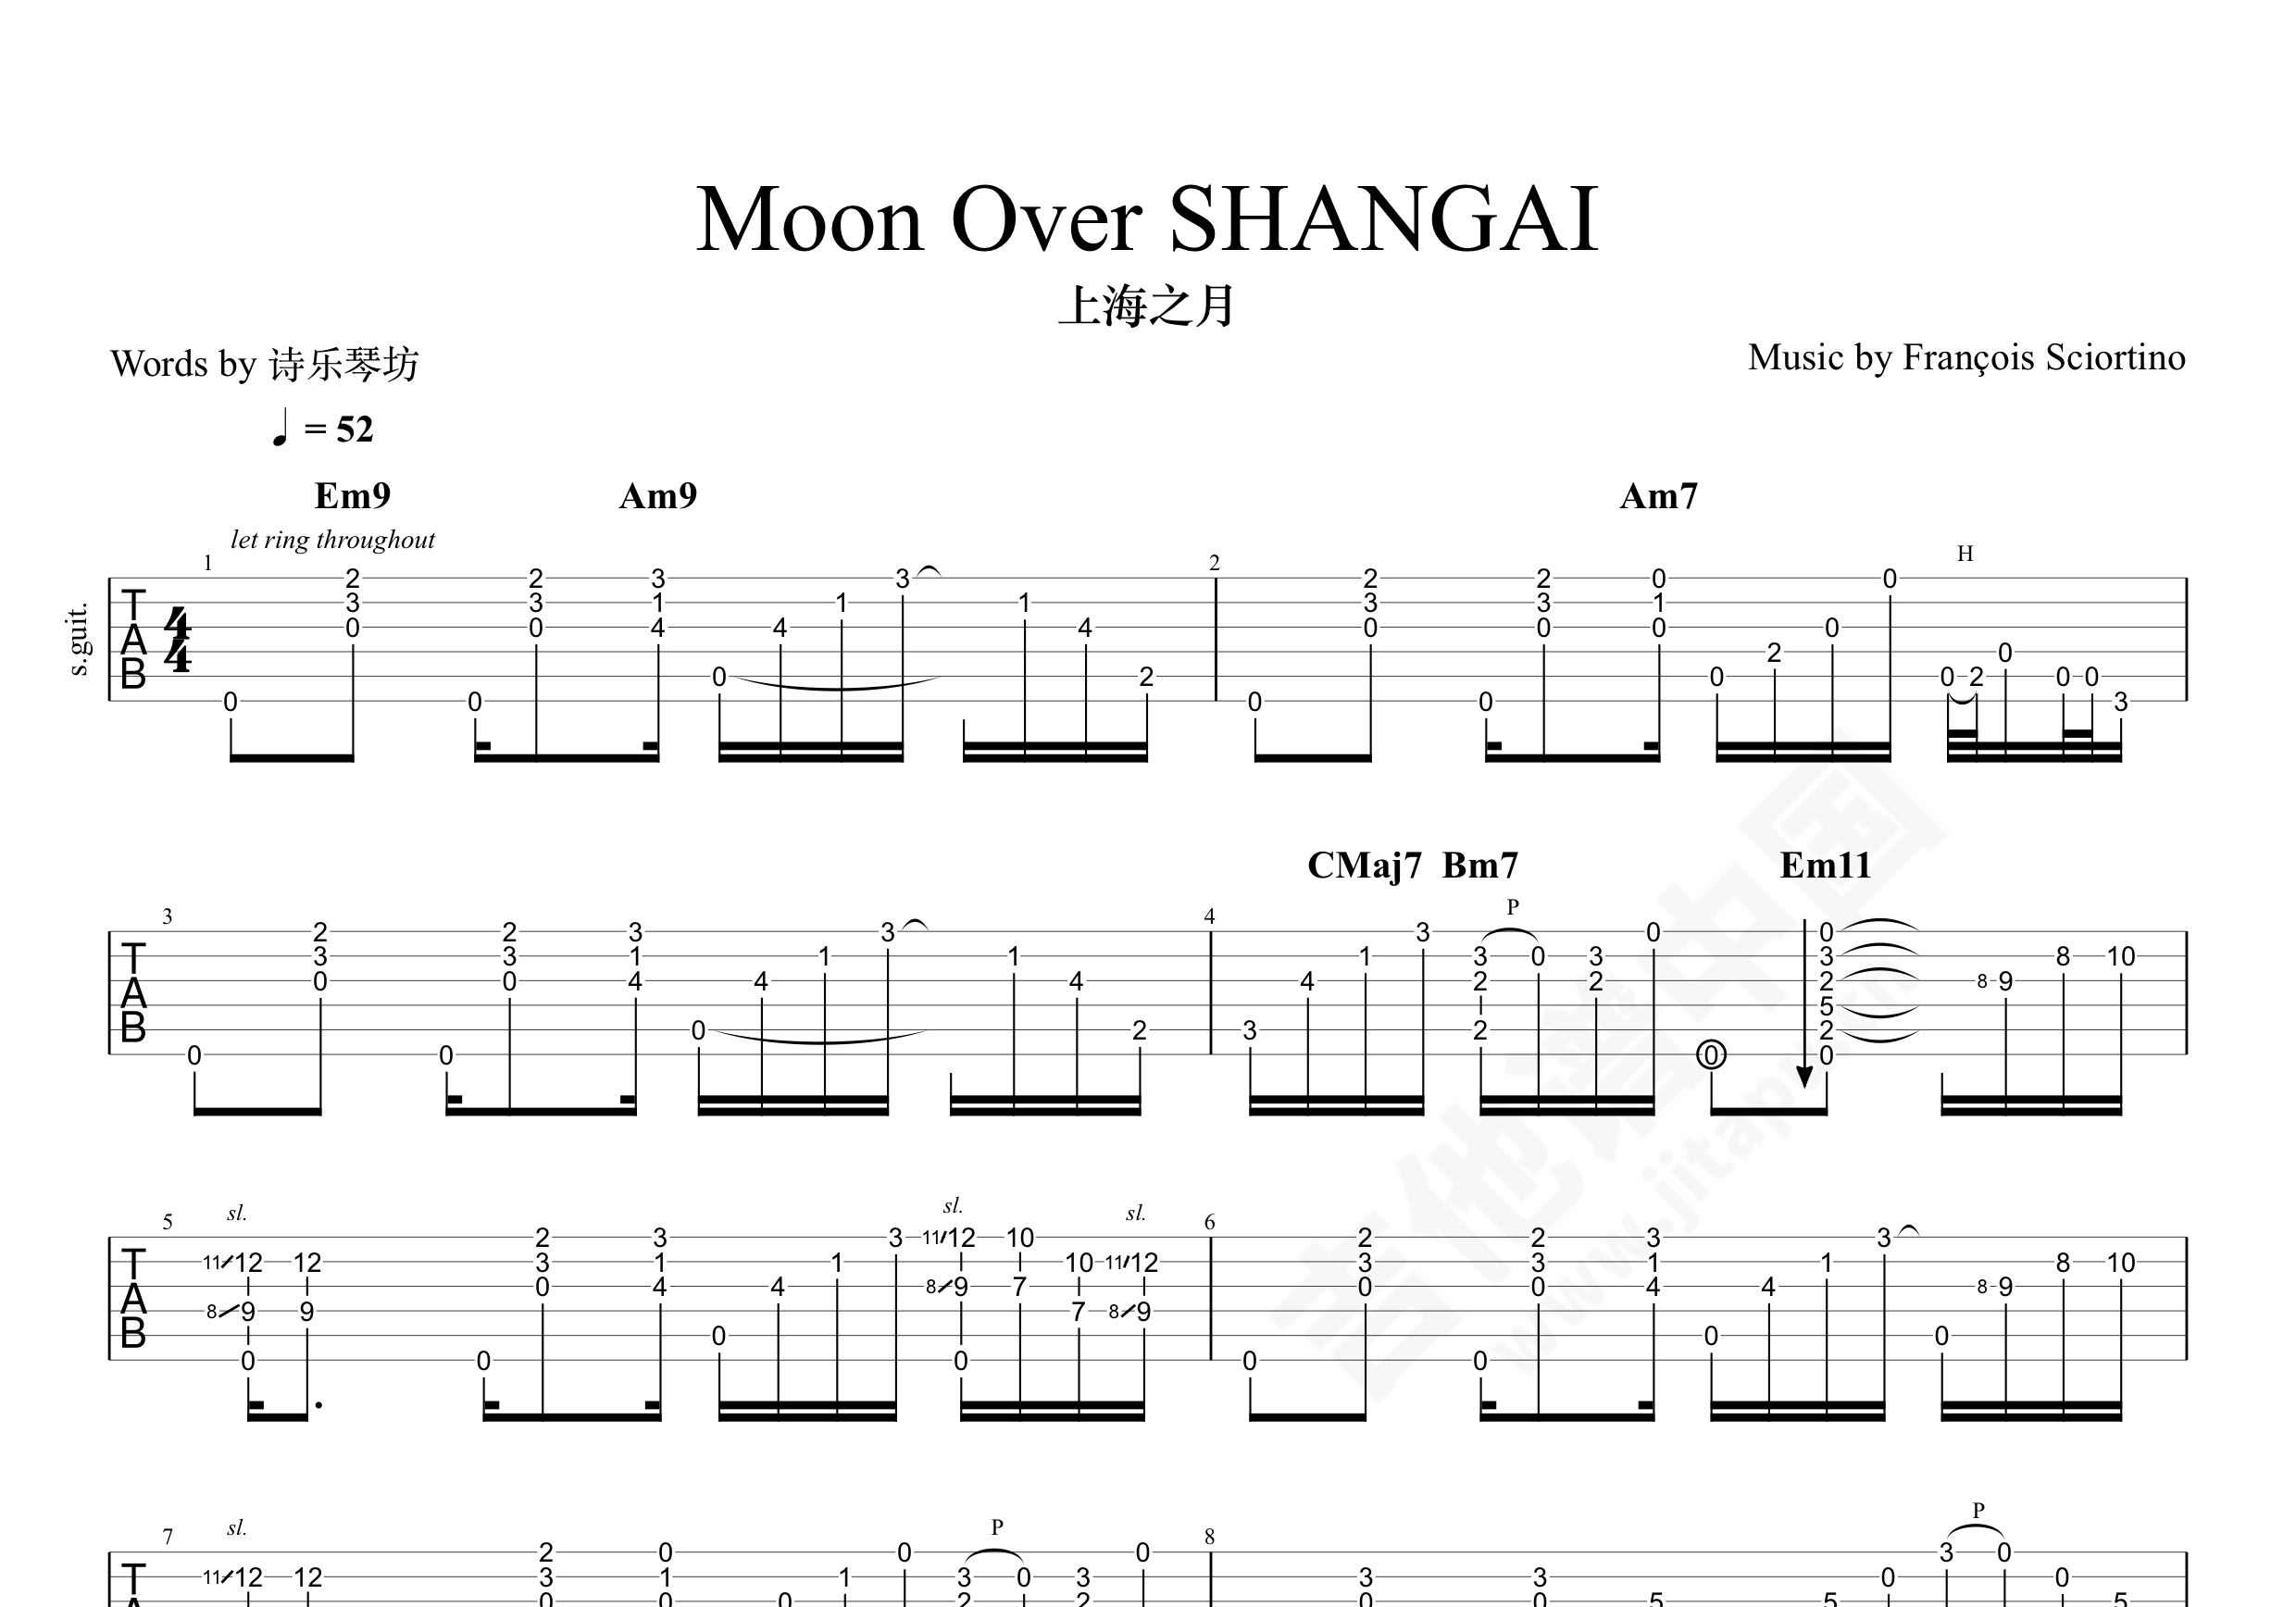 Moon Over SHANGAI